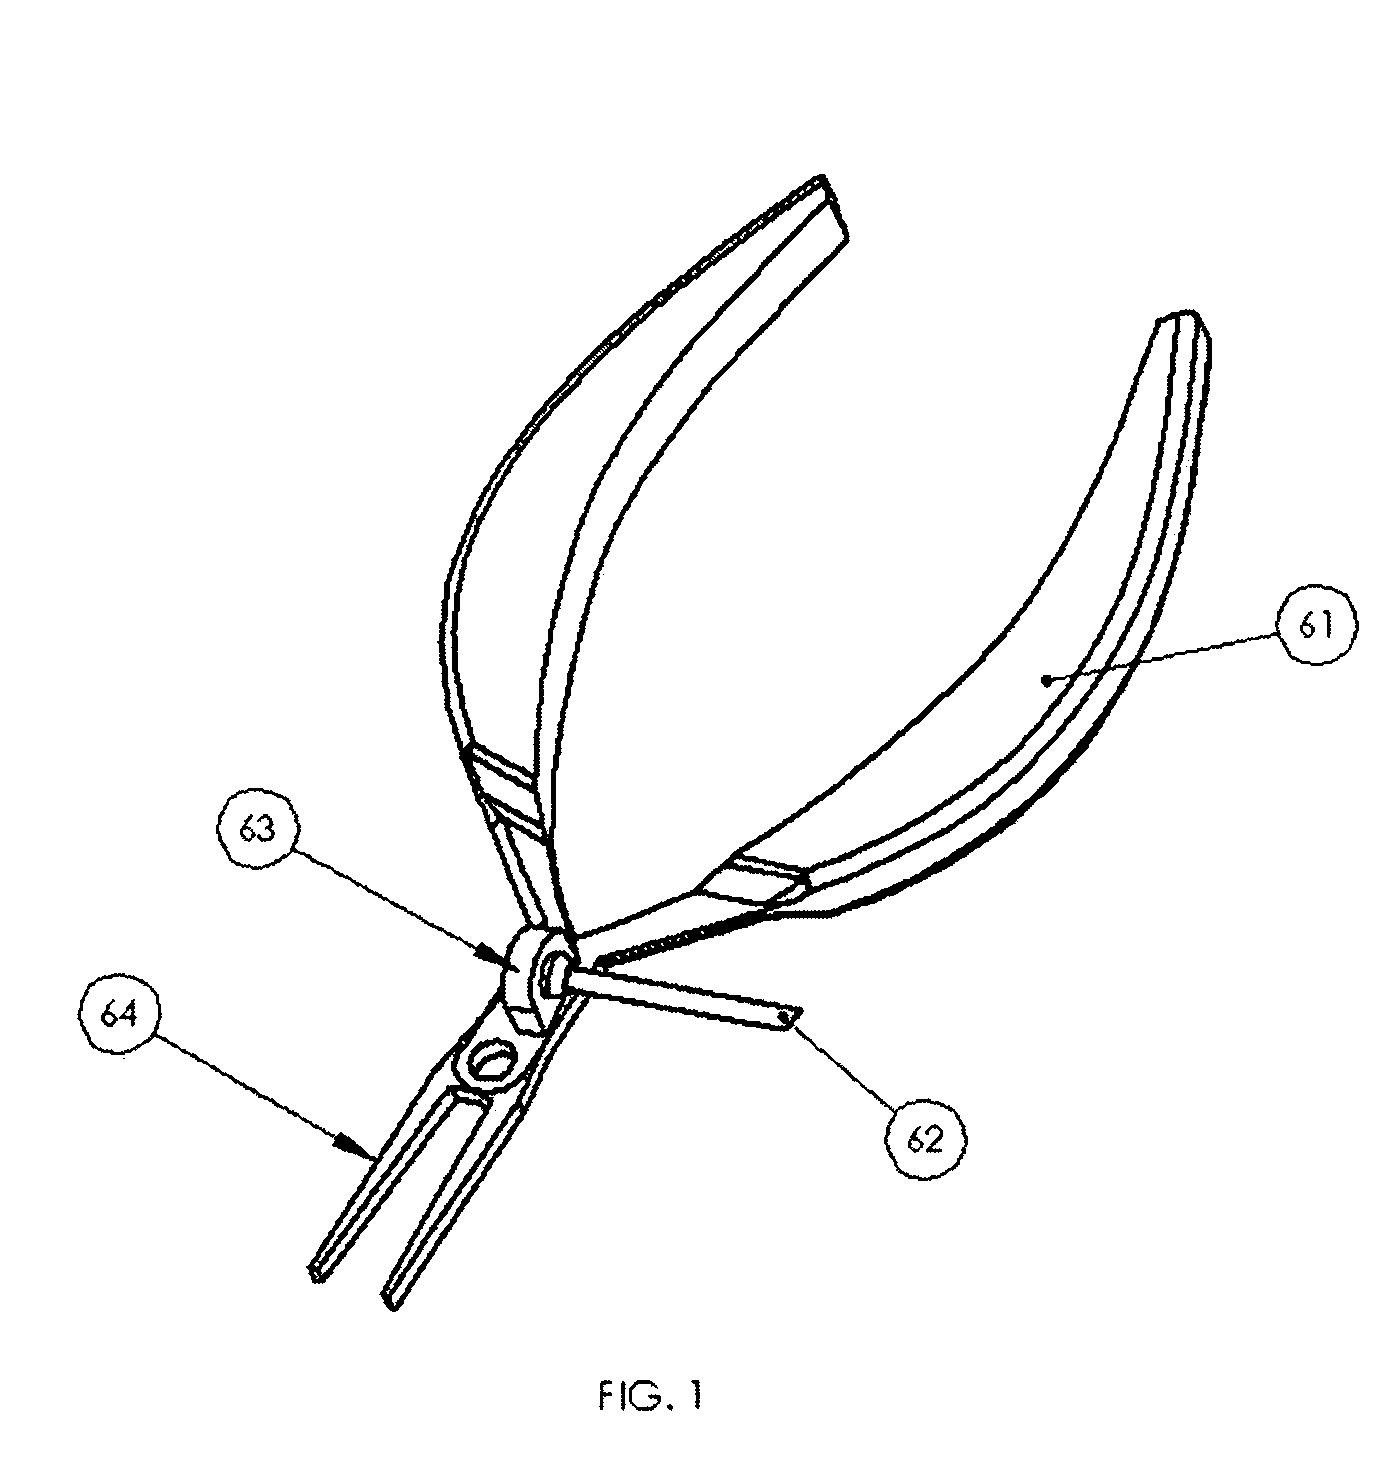 Apparatus and procedure for fish pin boning